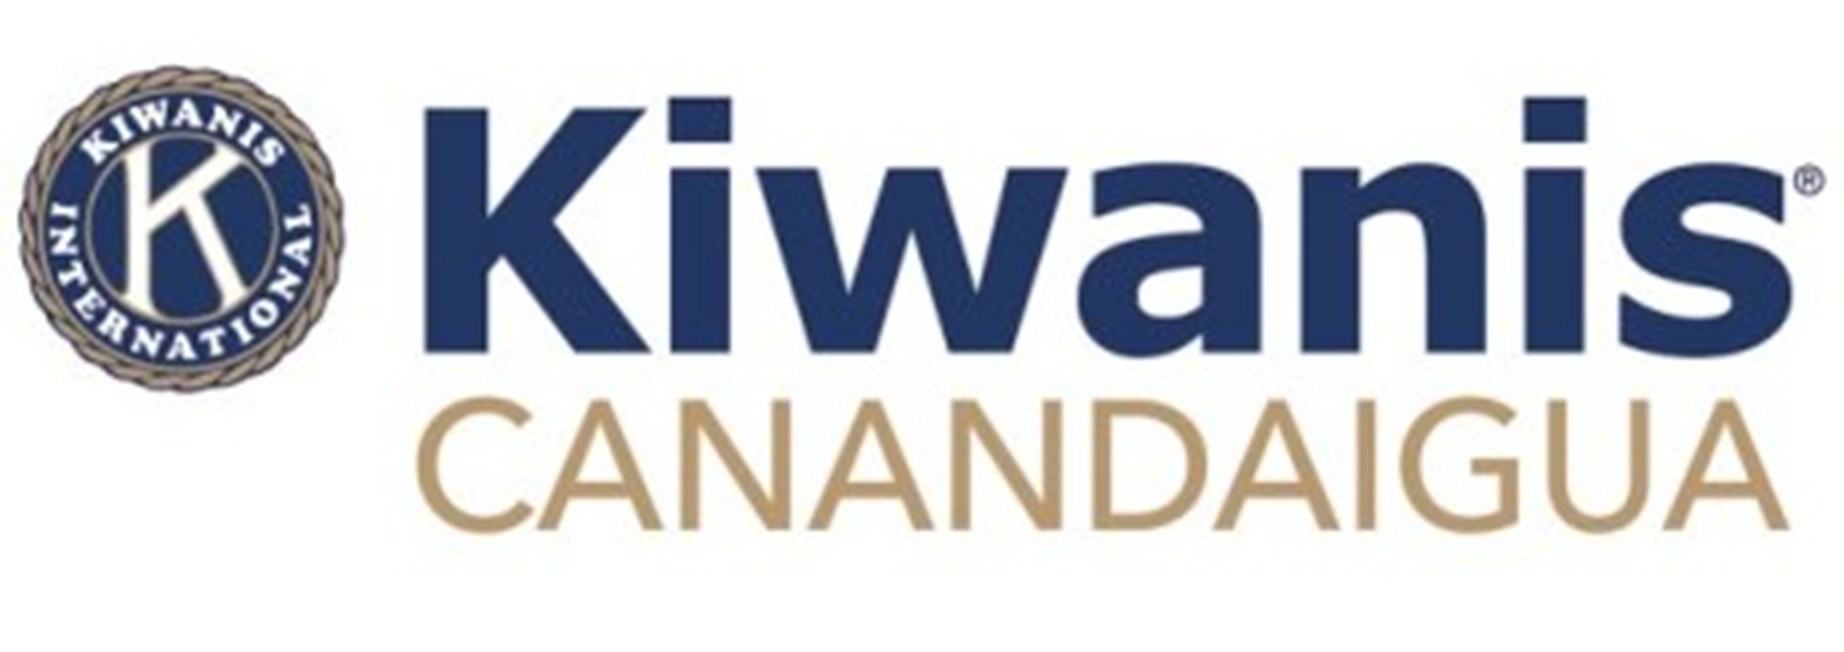 Kiwanis Canandaigua logo